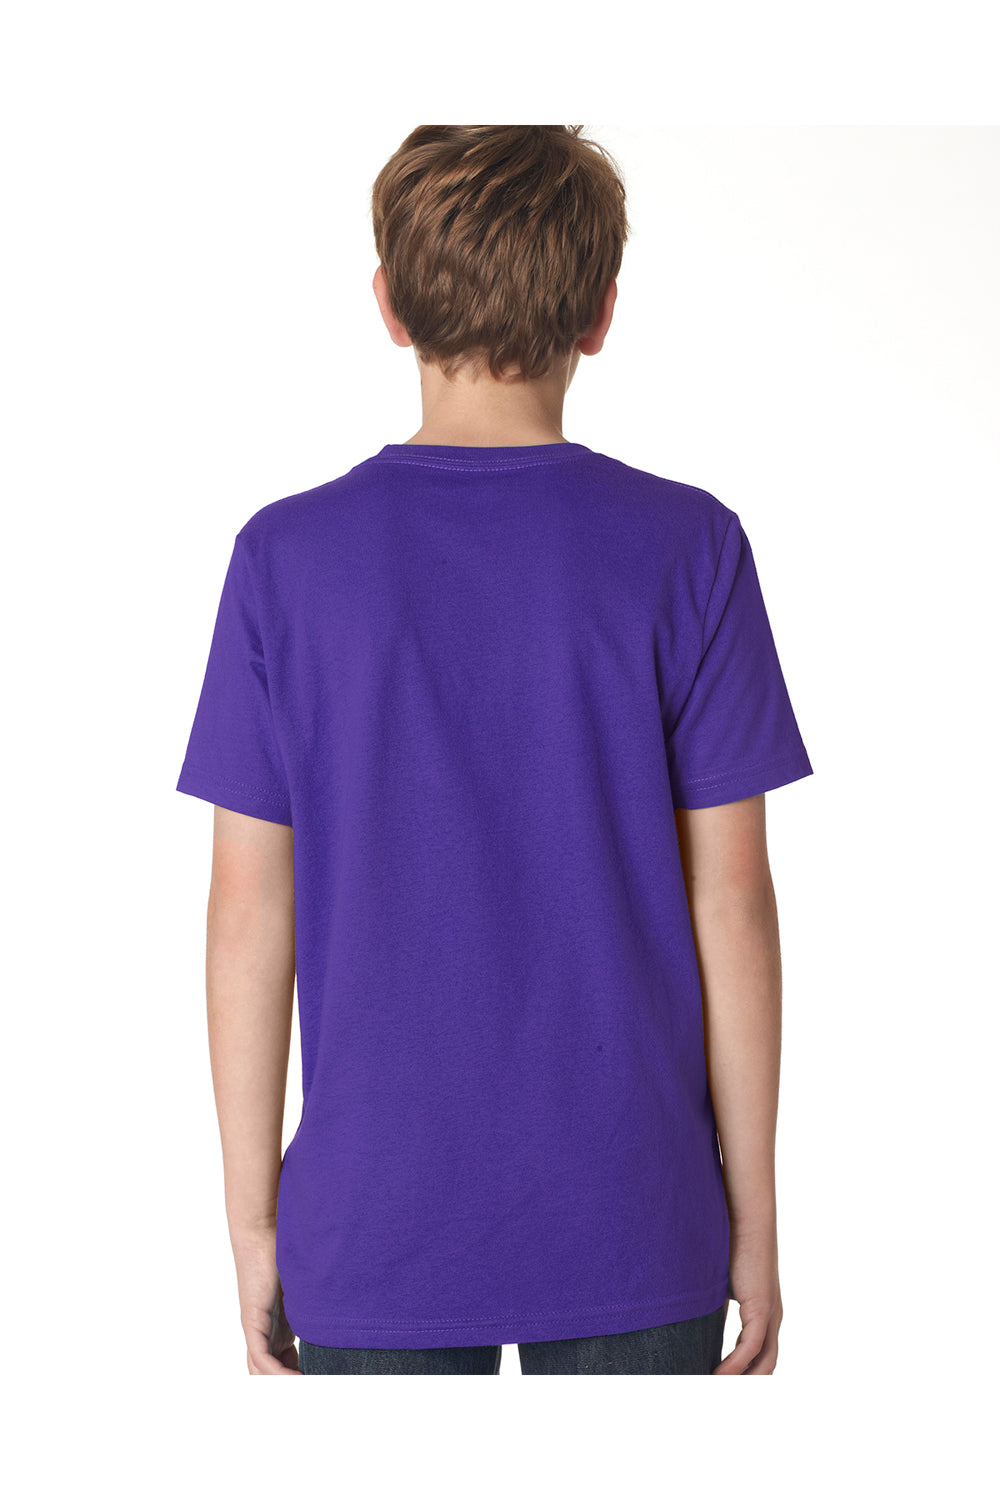 Next Level 3310 Youth Fine Jersey Short Sleeve Crewneck T-Shirt Purple Rush Back